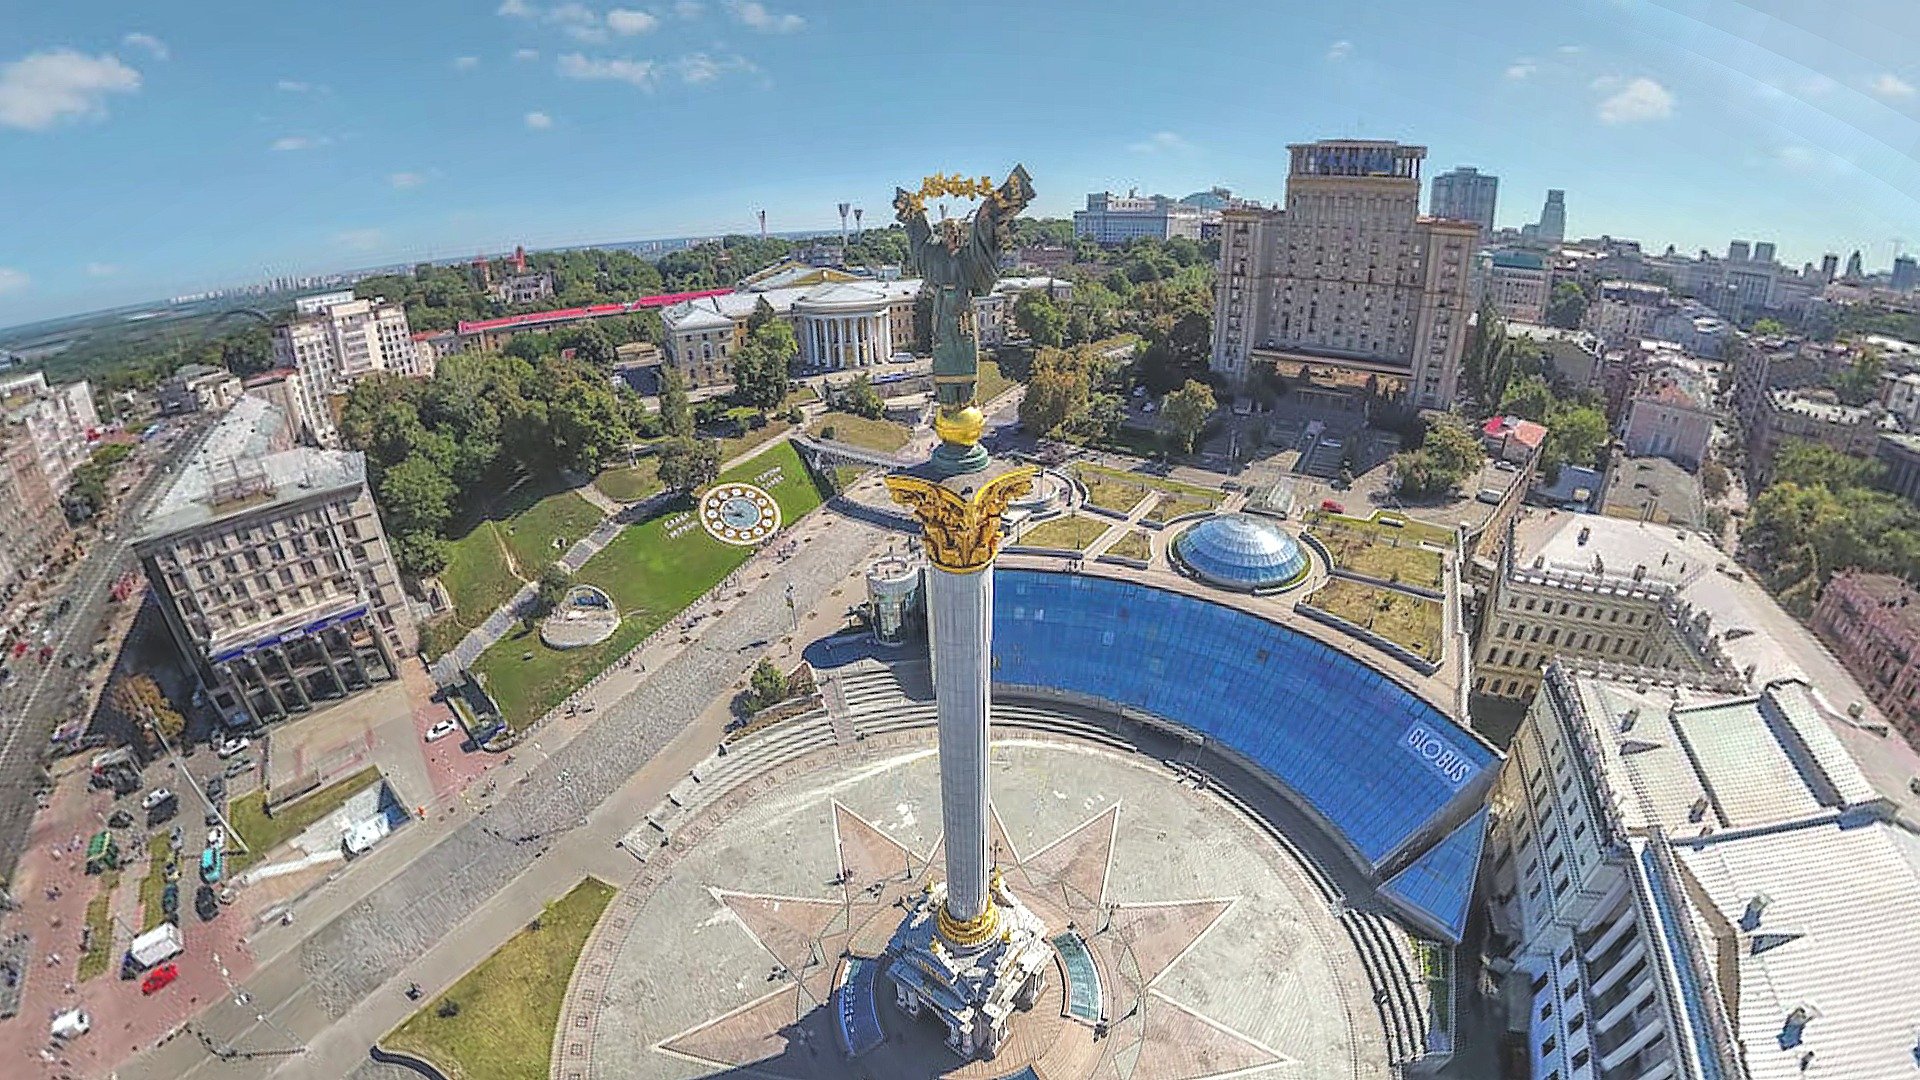 Maidan Nezalezhnosti (Ukrainian: Майдан Незалежності [mɐjˈdɑn nezɐˈlɛʒnosʲtʲi], literally &ldquo;Independence Square